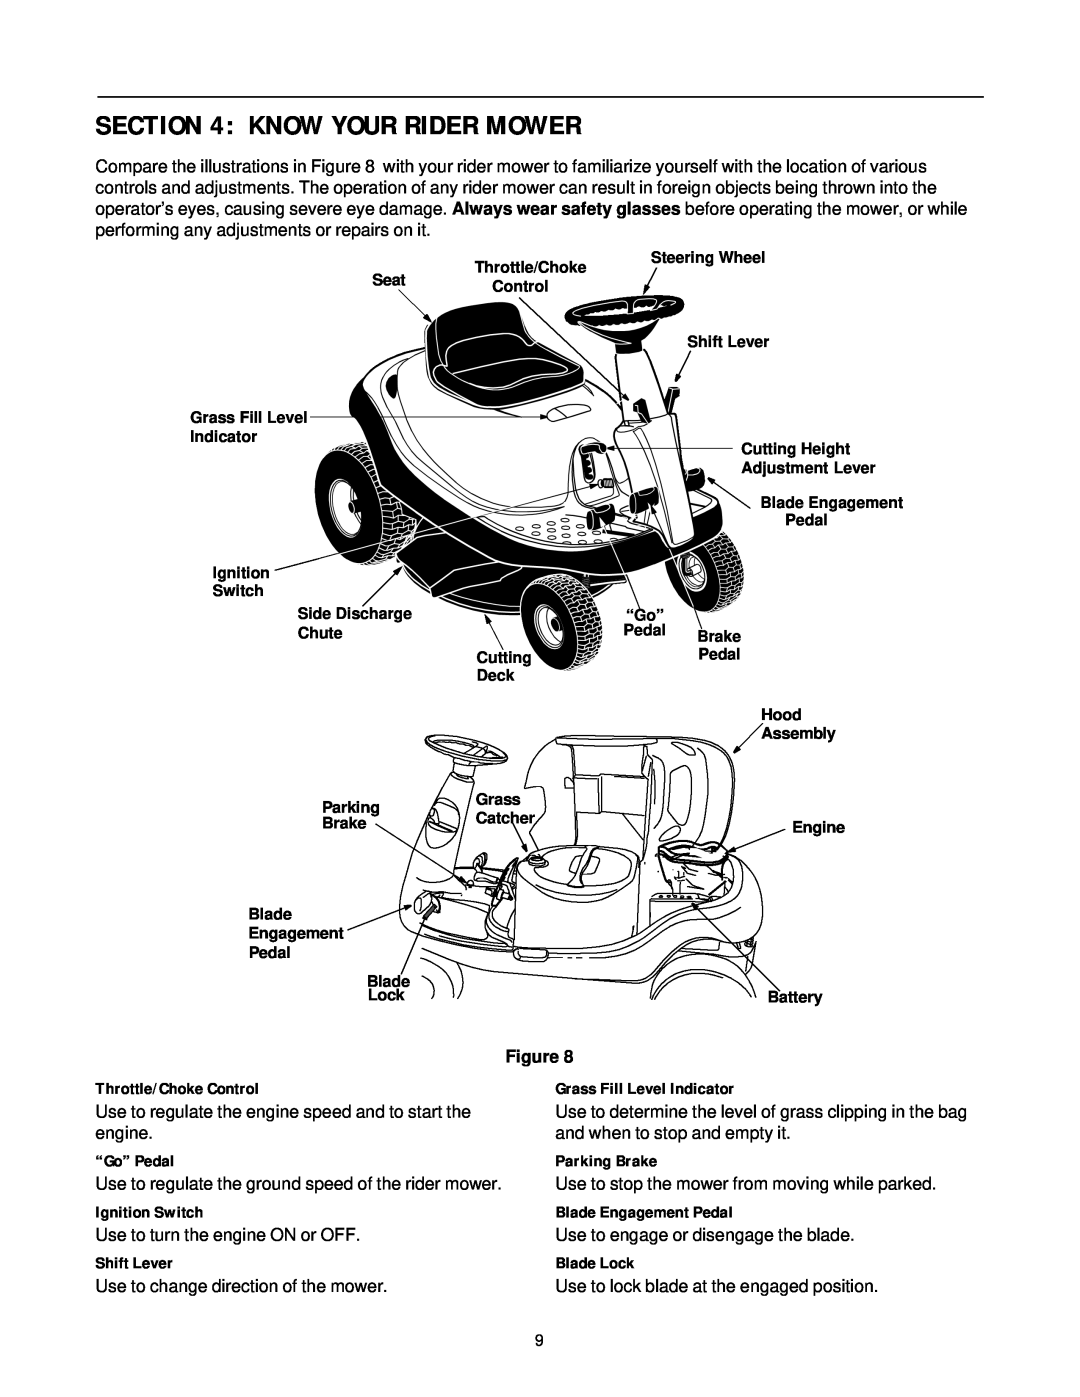 Yard-Man 13B-325-401 Know Your Rider Mower, Throttle/Choke Control, Grass Fill Level Indicator, “Go” Pedal, Parking Brake 